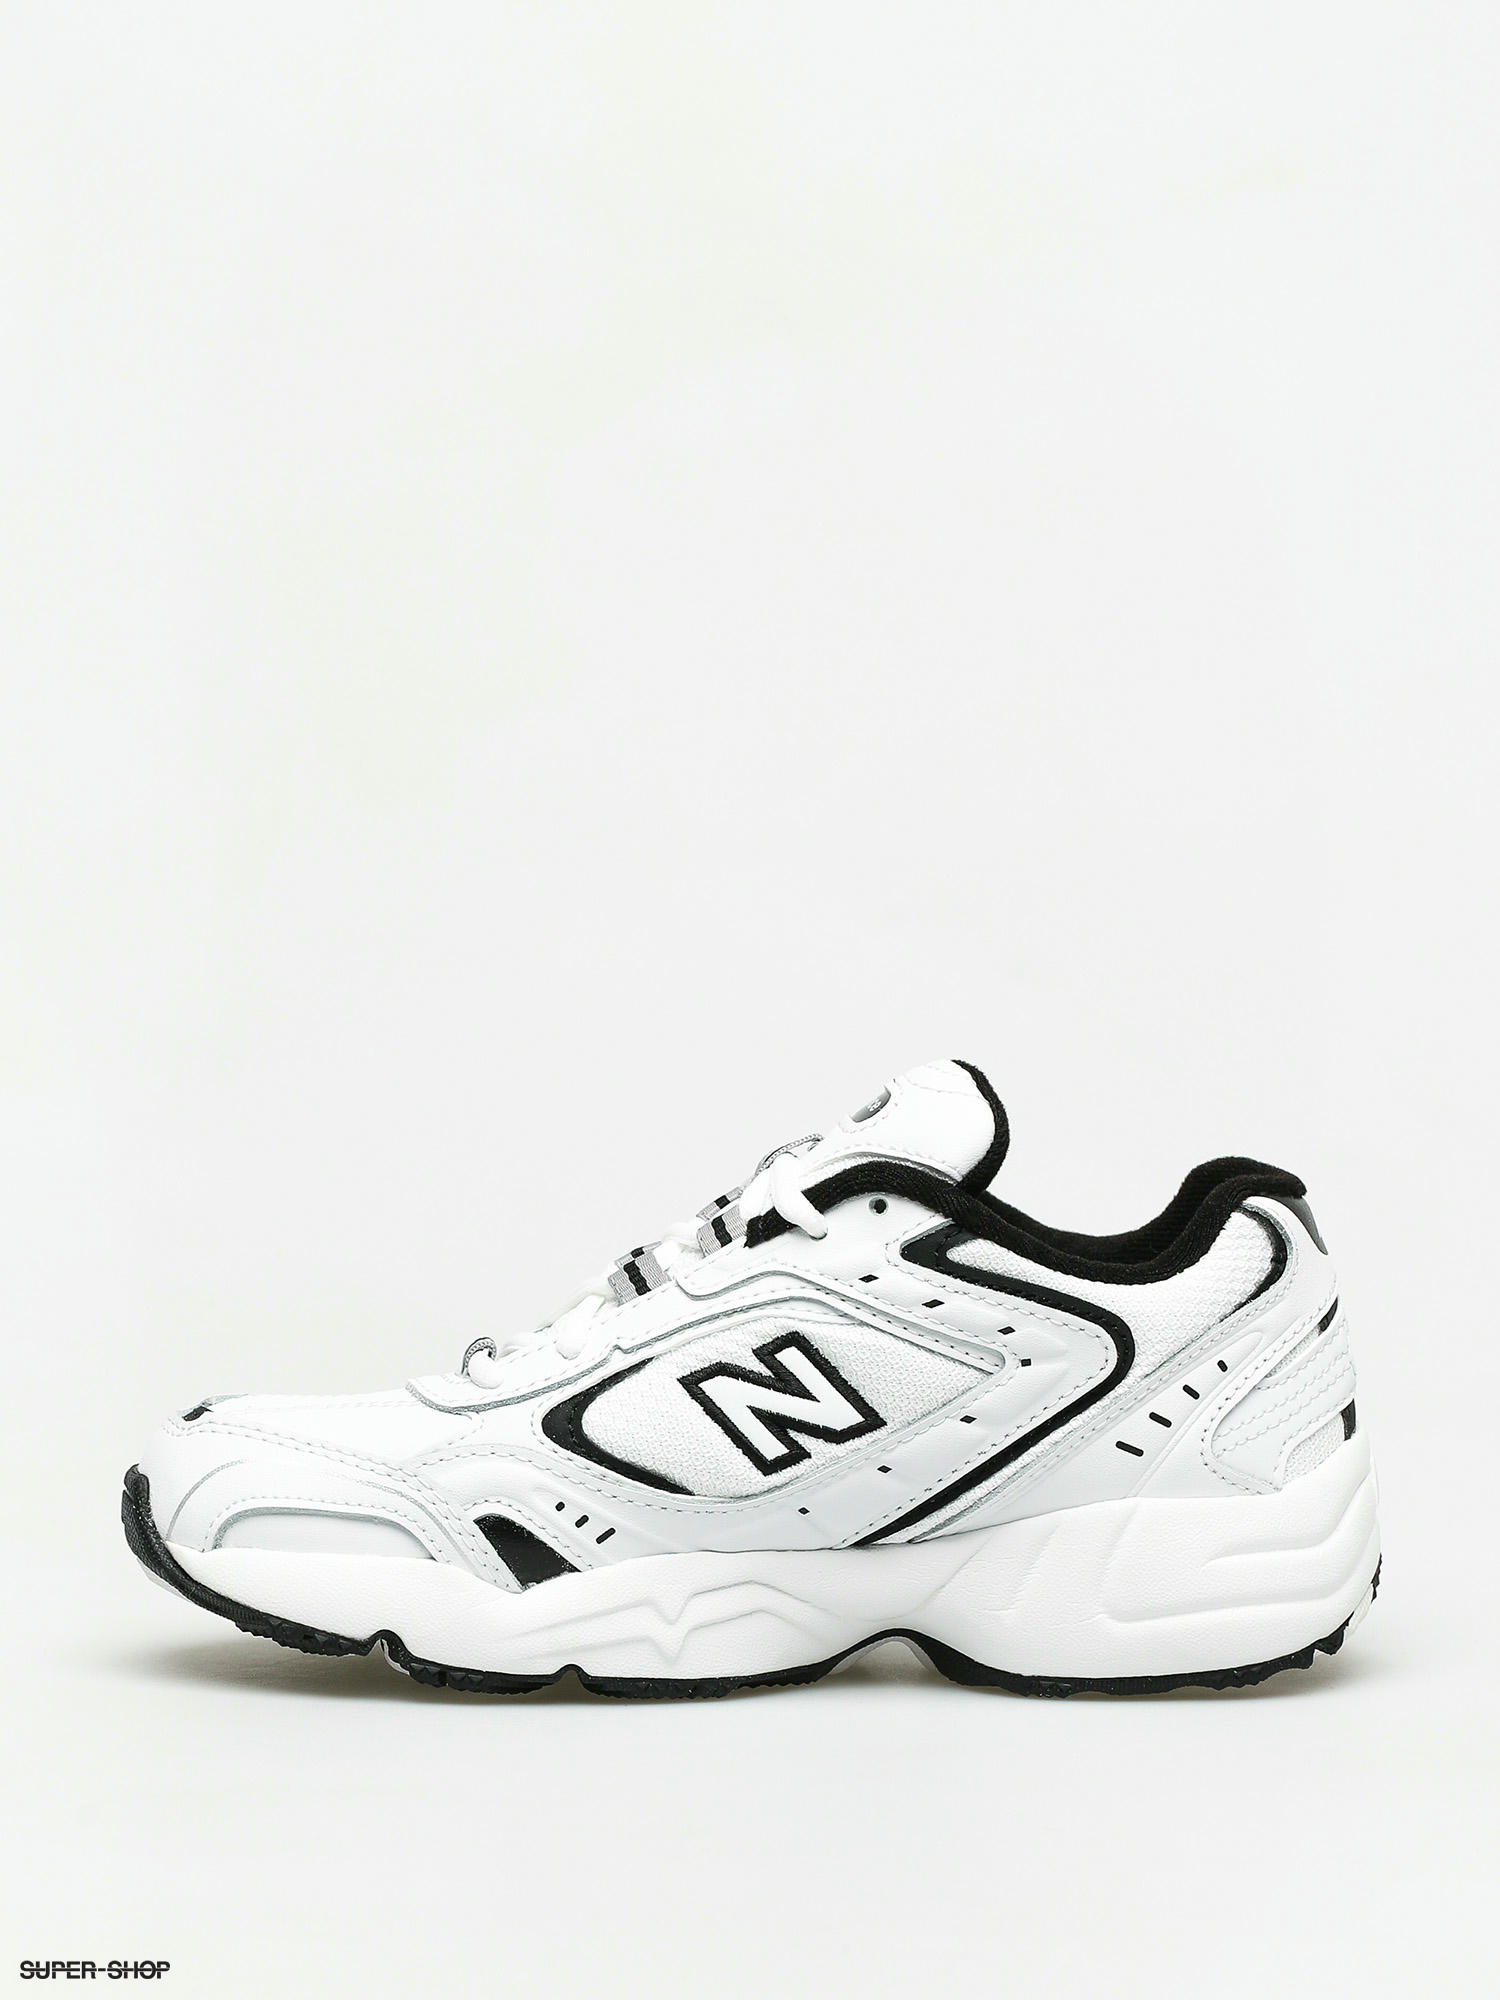 New Balance 452 Shoes Wmn (white/black)